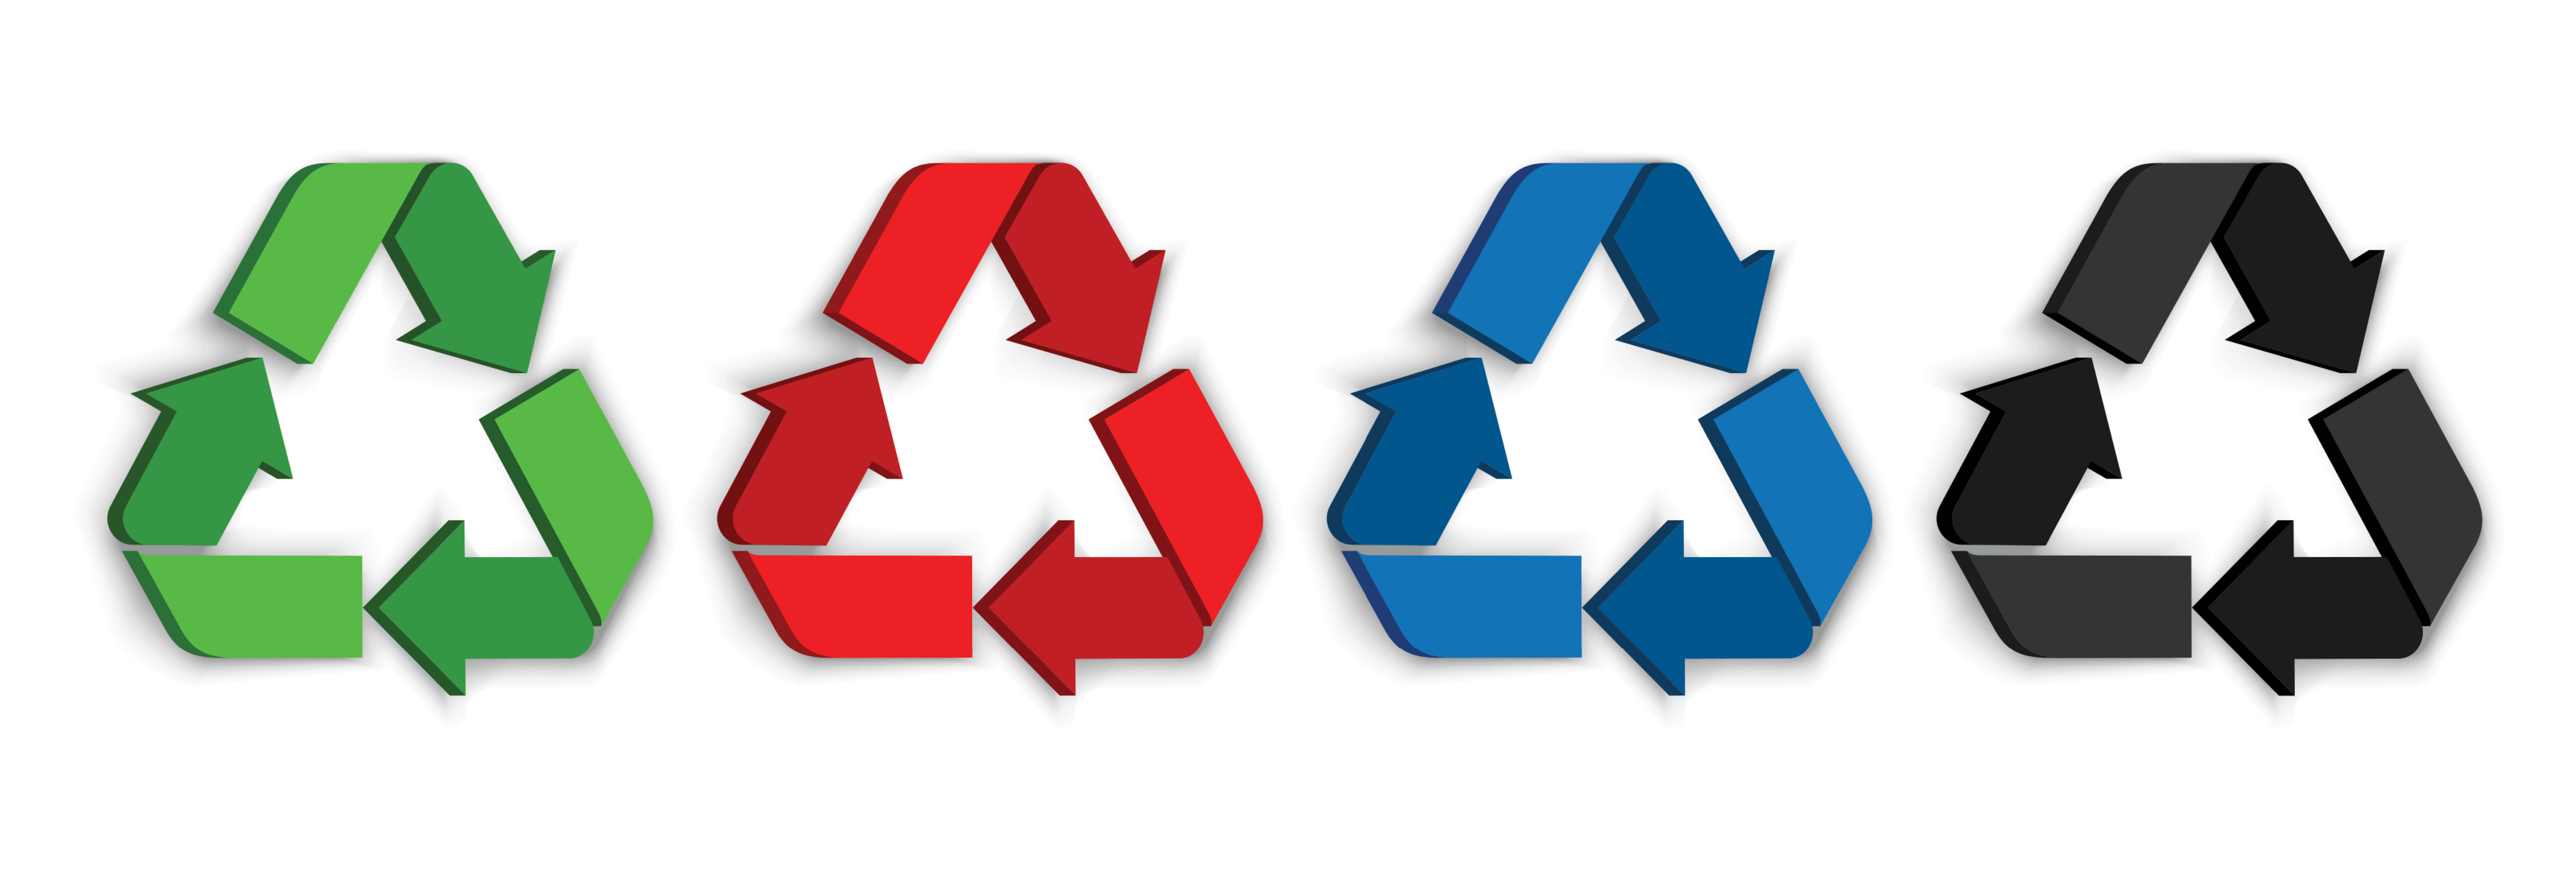 Mobius loop recycling symbols